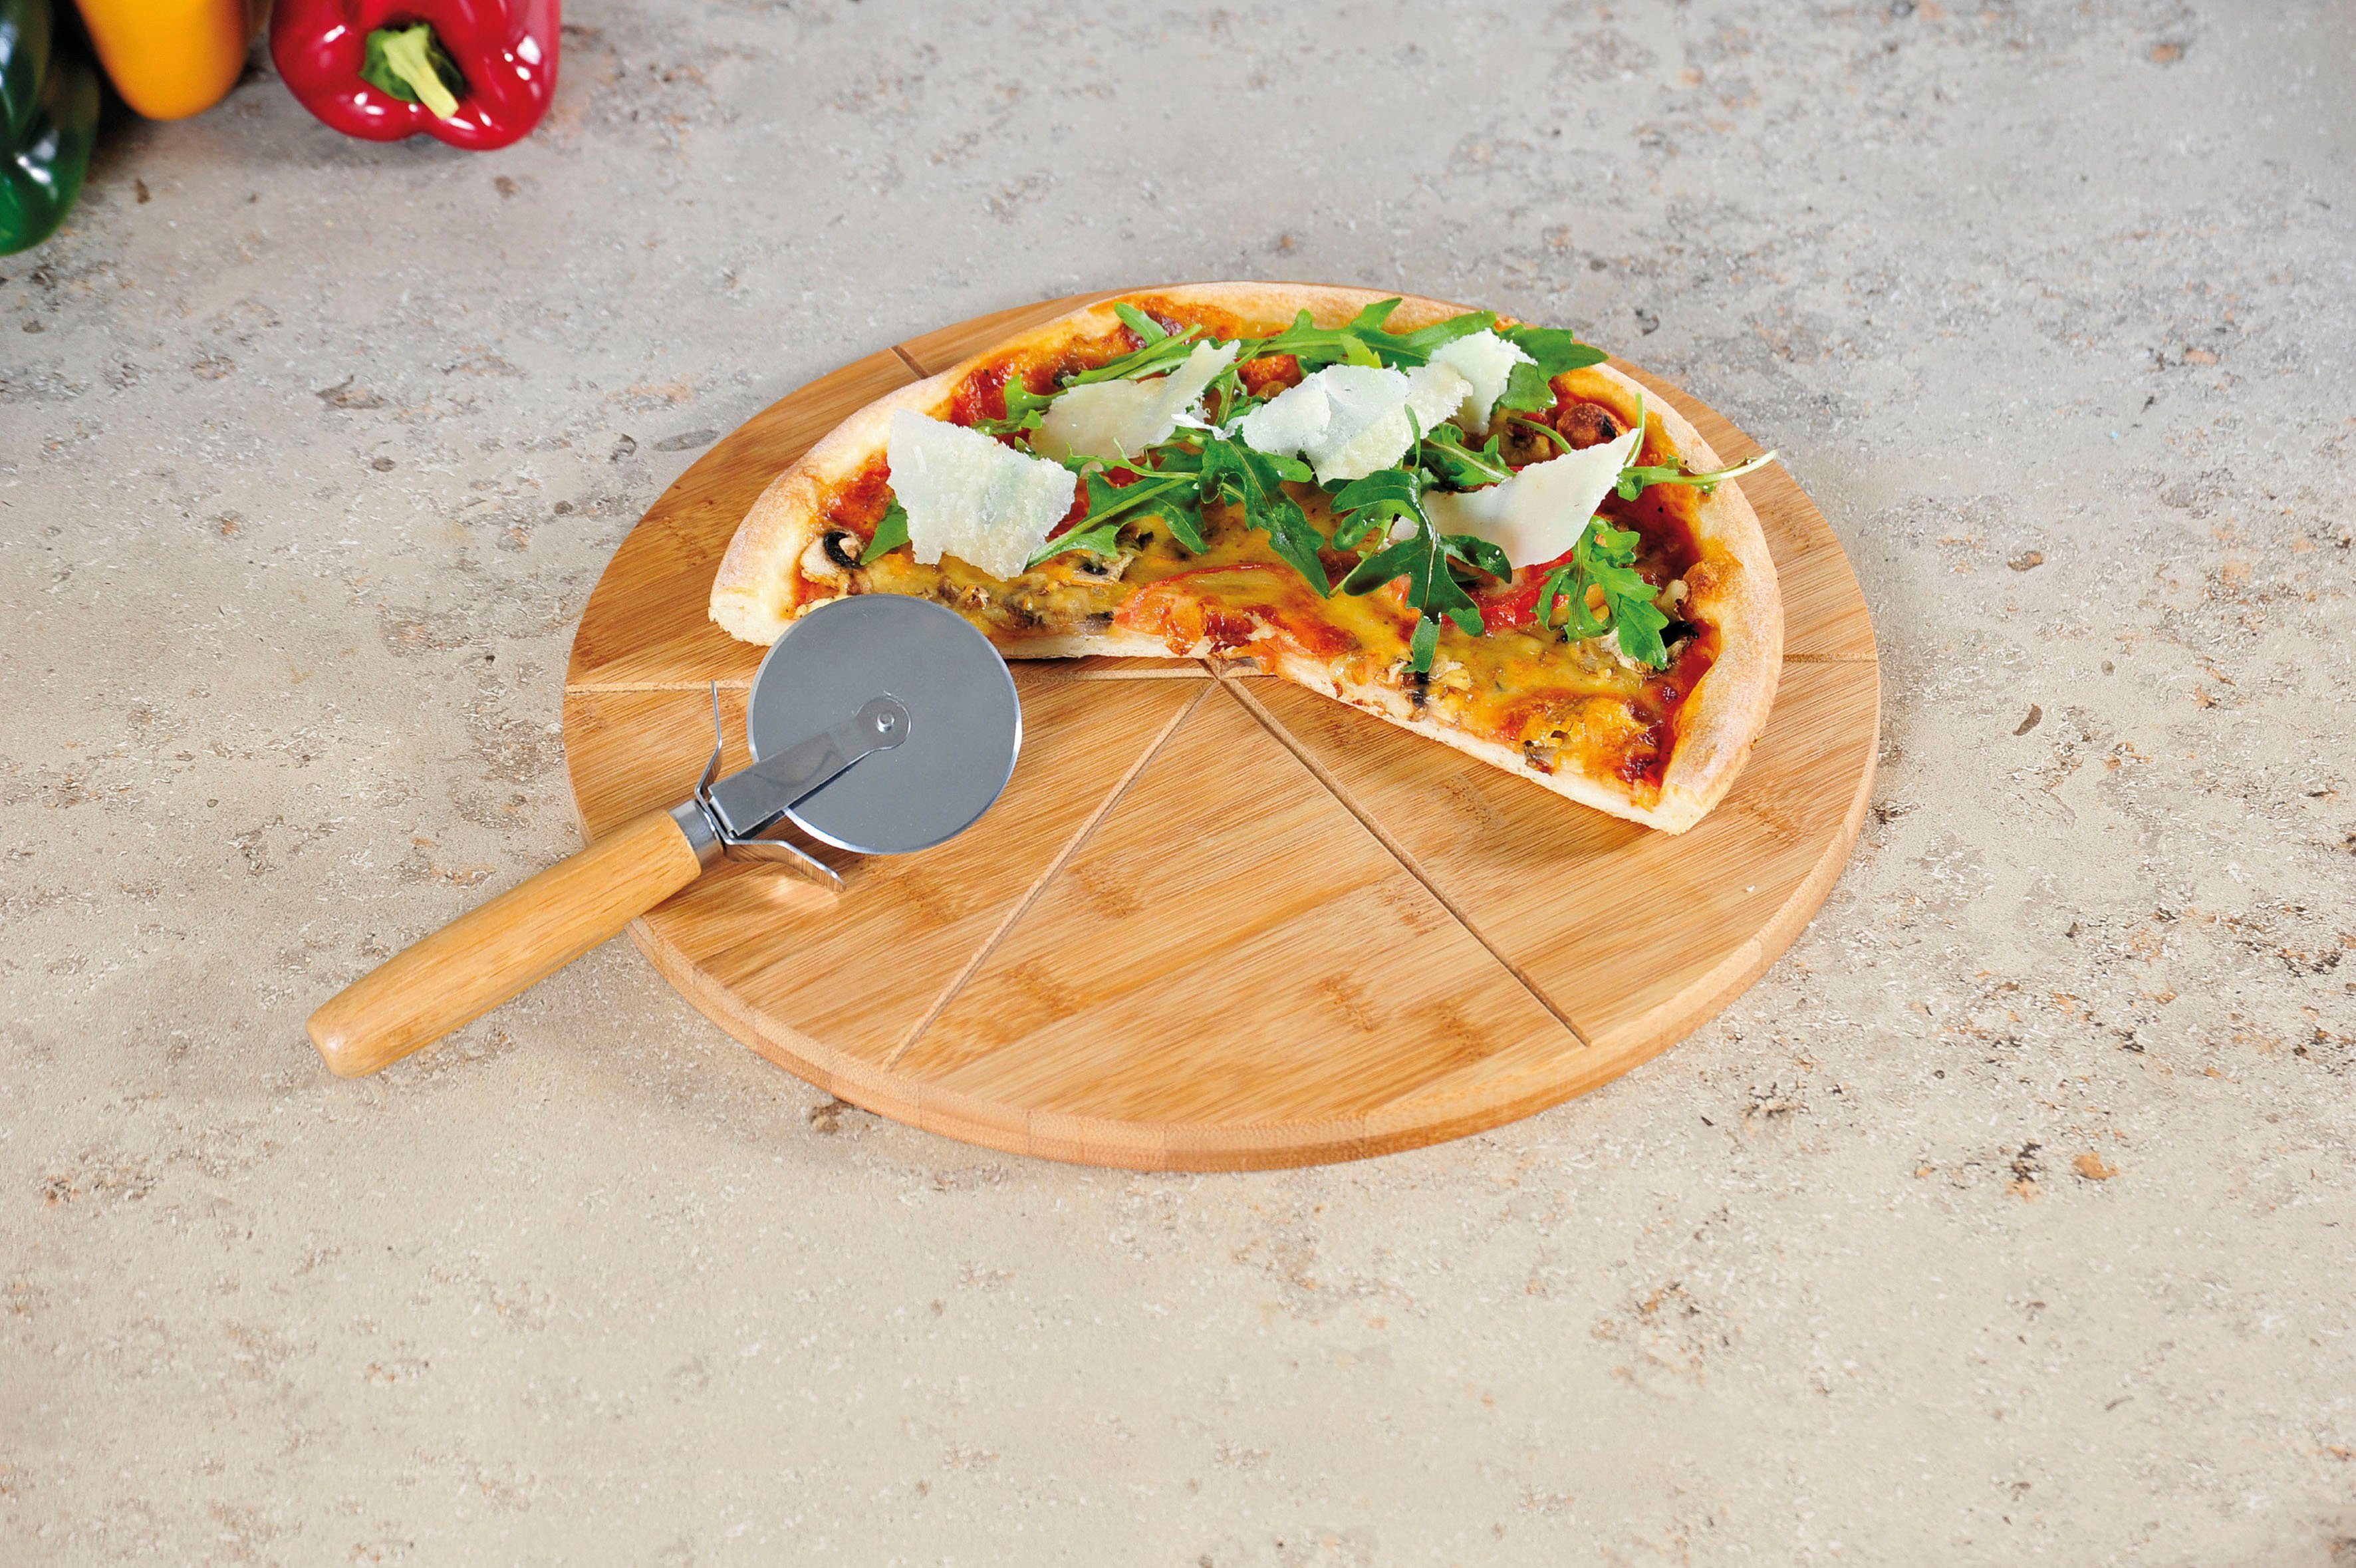 KESPER for kitchen & home 3-St), Pizzaschneider, Schneidebrett, FSC-zertifiziertem aus inkl. (Set, Bambus Edelstahl, Holz